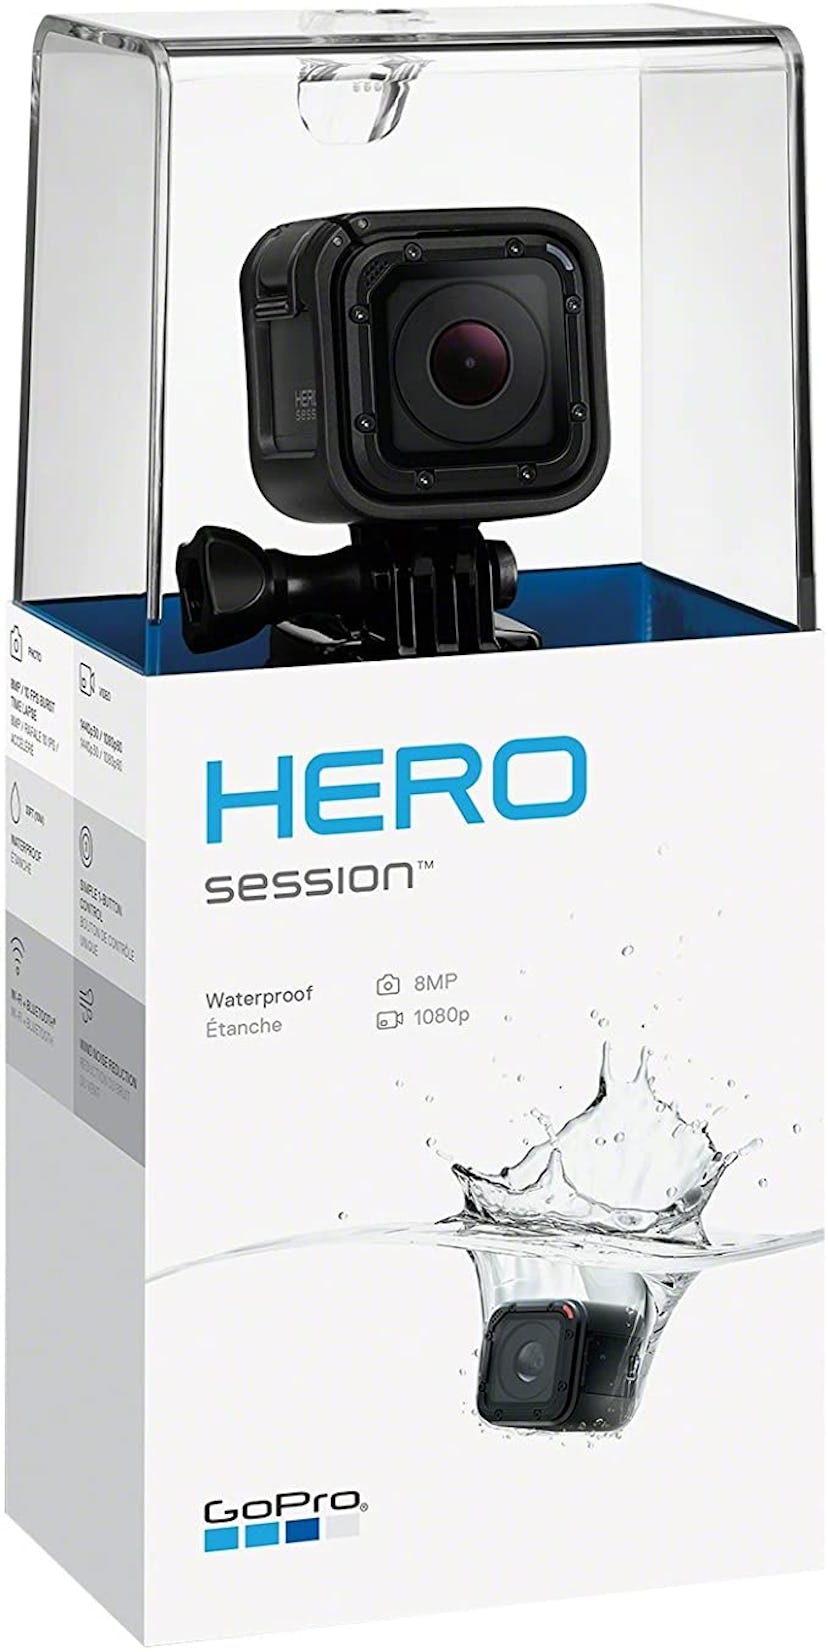 HERO Session Waterproof Digital Action Camera